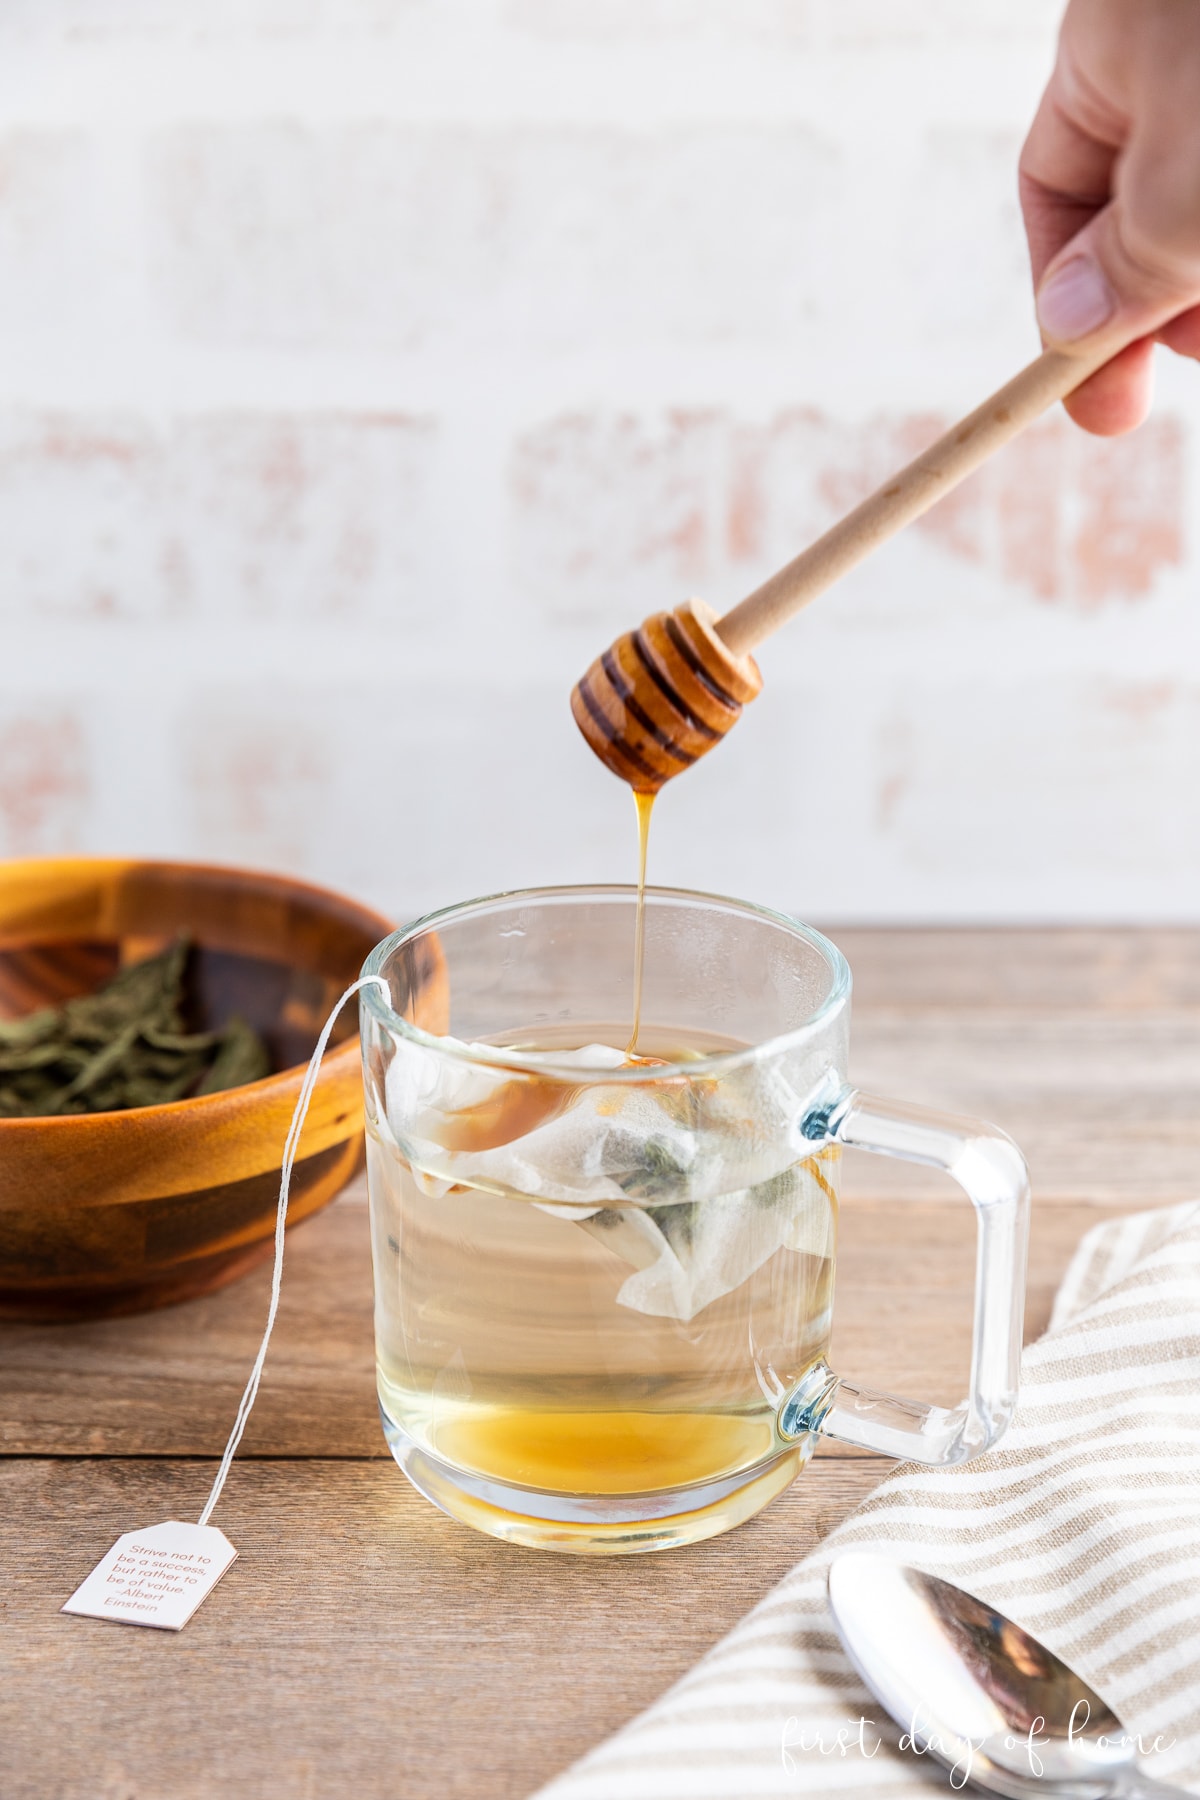 Honey dipper dripping honey into mug with homemade herbal tea.